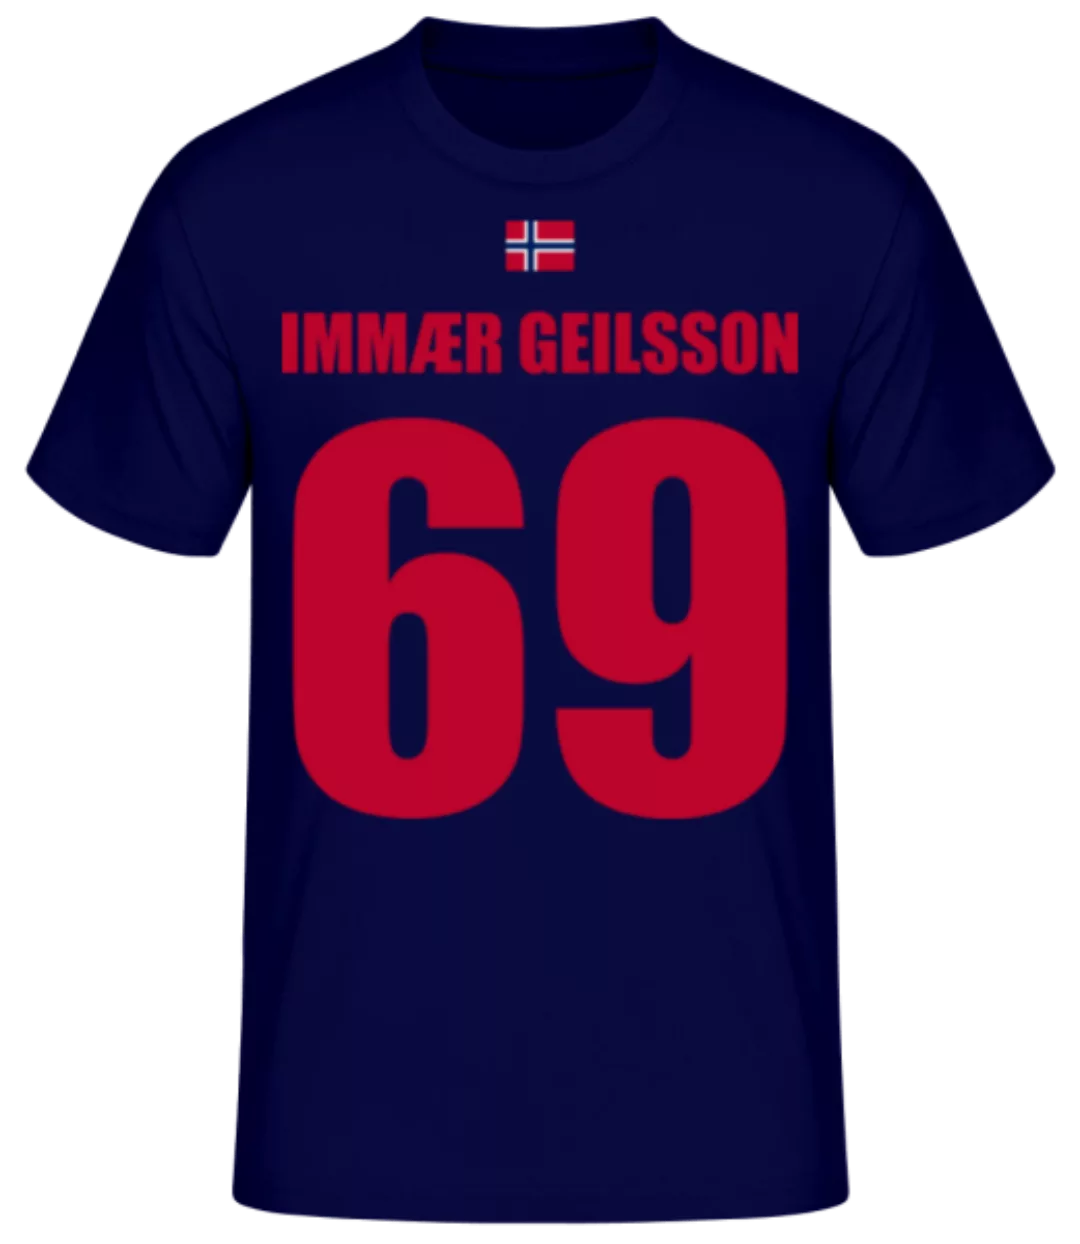 Norwegen Fußball Trikot Immær Geilsson · Männer Basic T-Shirt günstig online kaufen